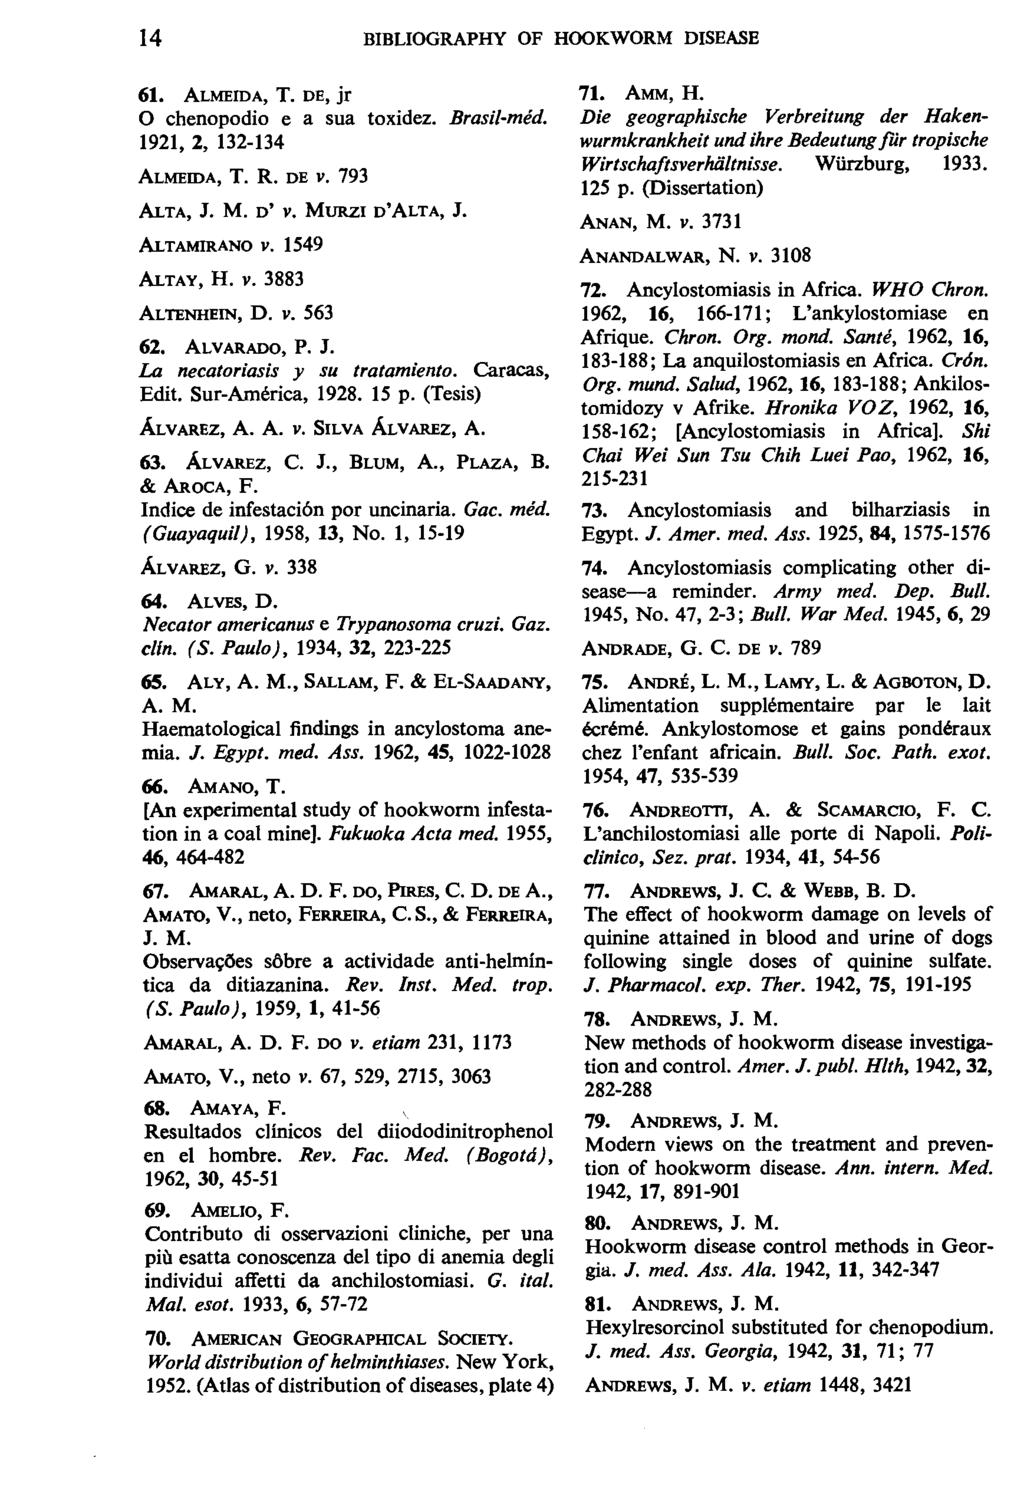 14 BIBLIOGRAPHY OF HOOKWORM DISEASE 61. ALMEIDA, T. DE, jr 0 chenopodio e a sua toxidez. Brasil-med. 1921, 2, 132-134 ALMEIDA, T. R. DE v. 793 ALTA, J. M. D' v. MURZI D'ALTA, J. ALTAMIRANO v.